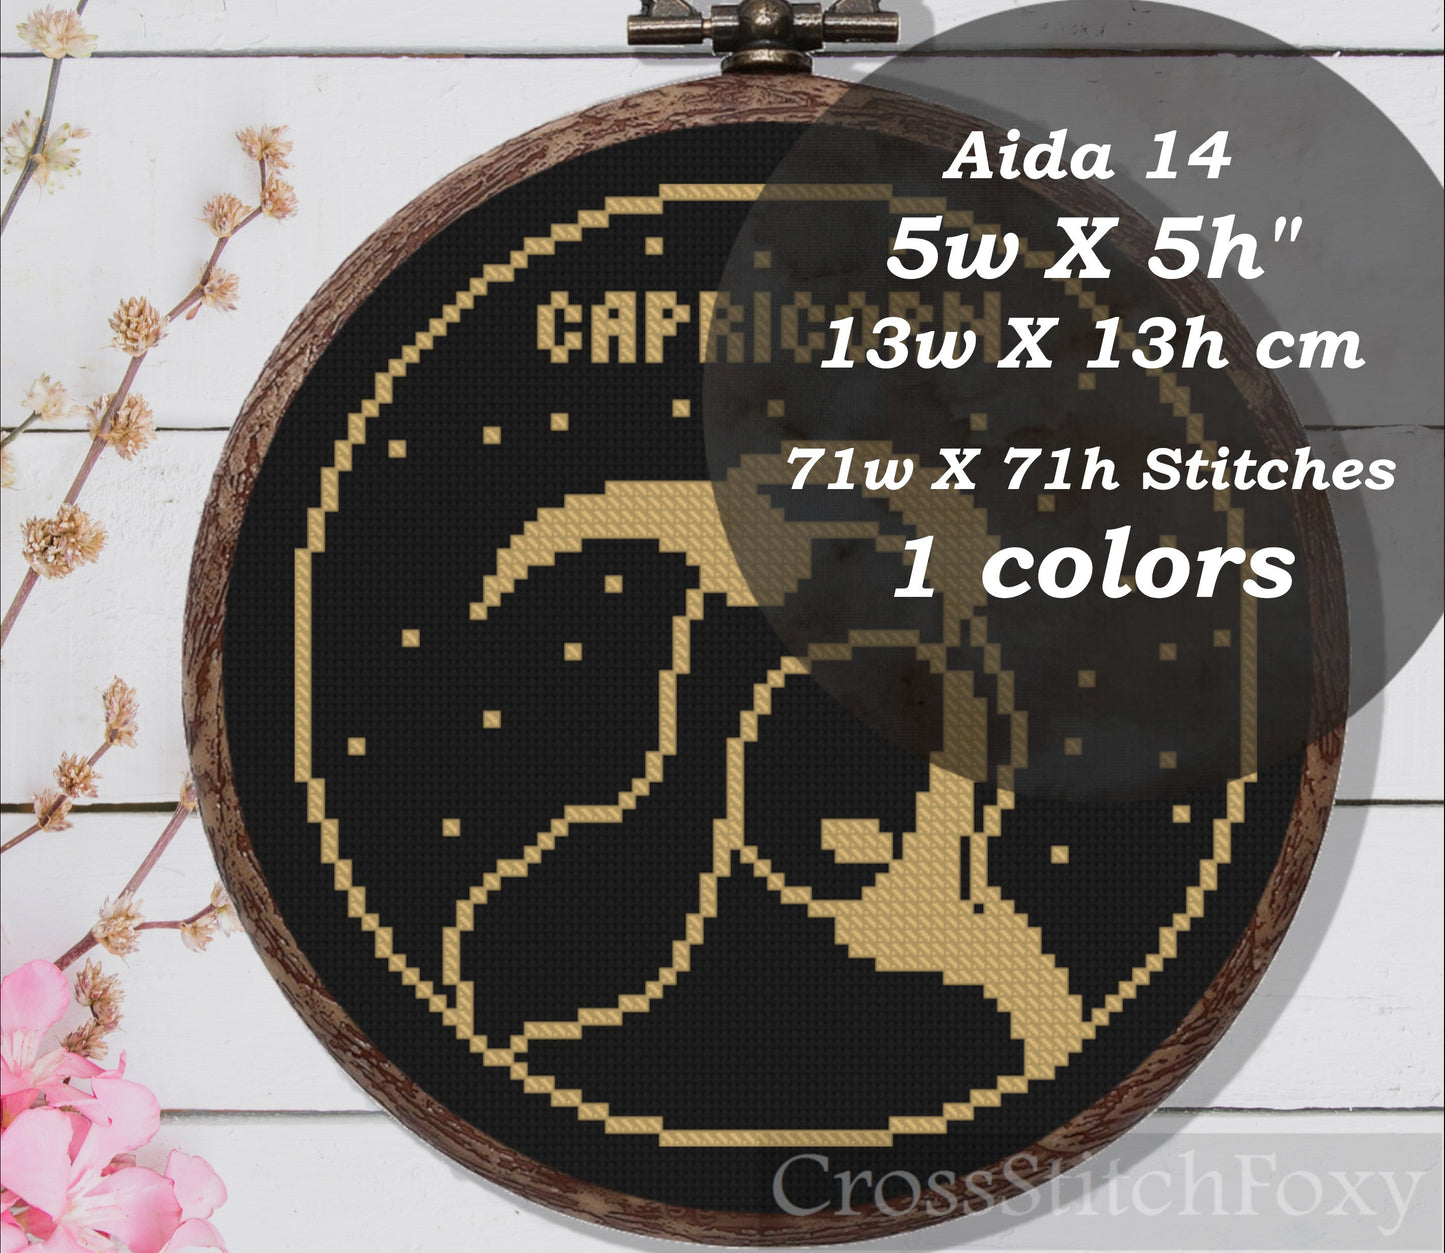 Female Capricorn Zodiac cross stitch pattern